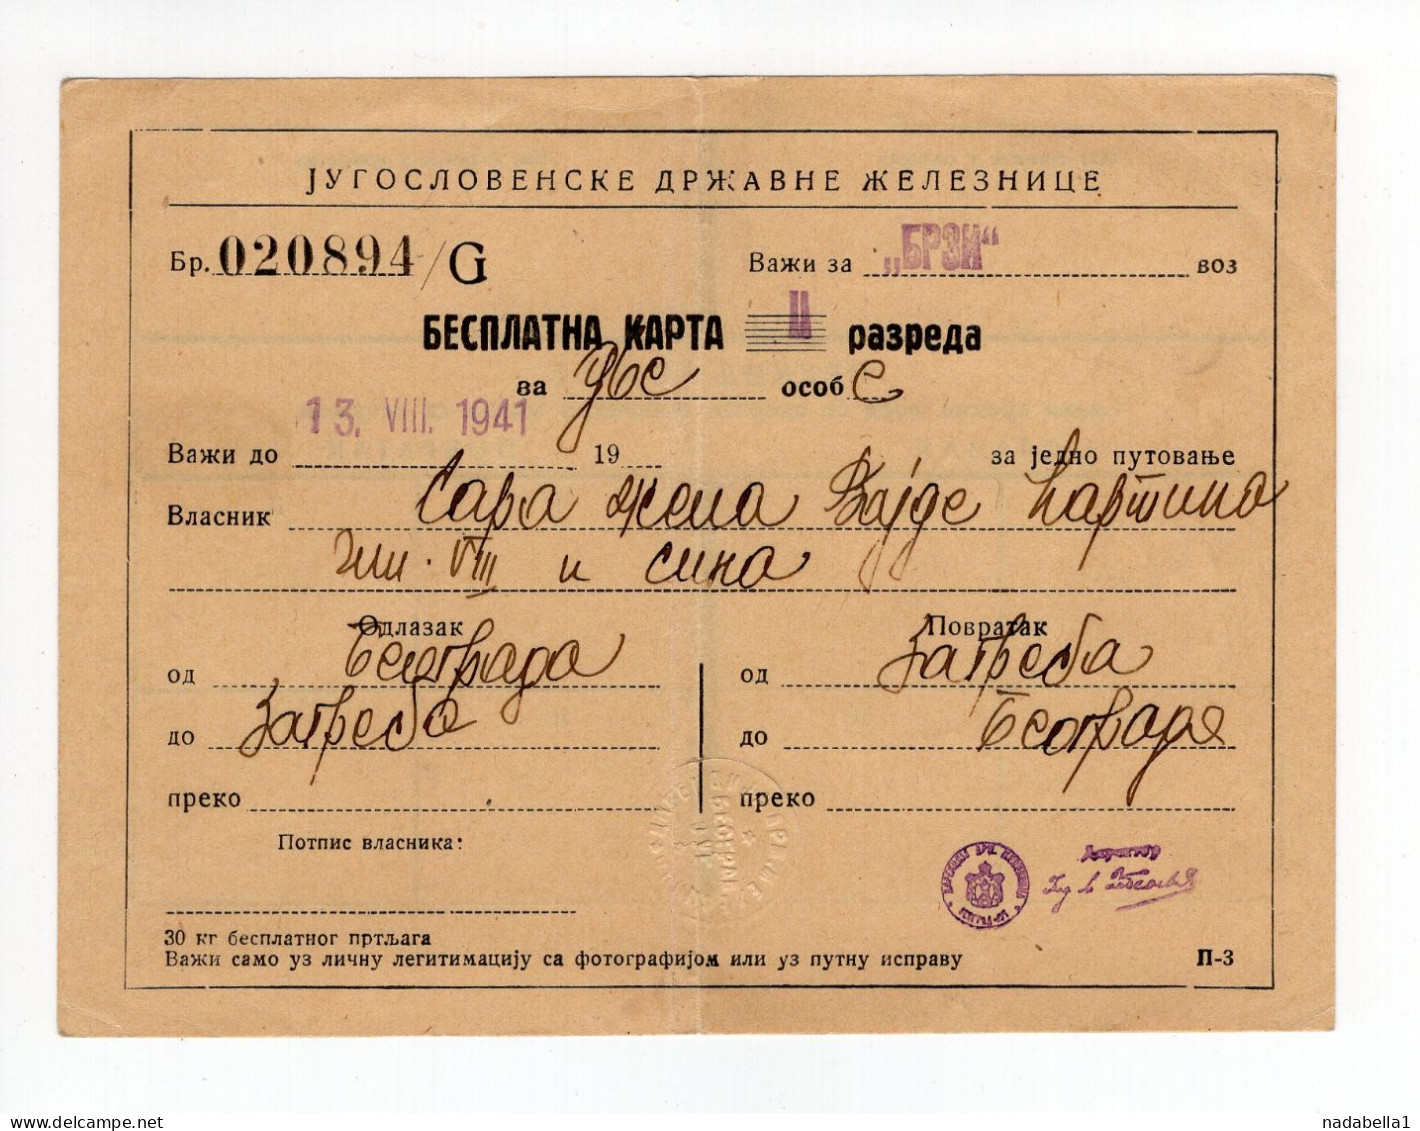 1941. WWII YUGOSLAVIA,SERBIA,BELGRADE TO ZAGREB FREE RETURN II CLASS RAILWAY TICKET ISSUED BY YUGOSLAV STATE RAILWAYS - Tickets - Vouchers